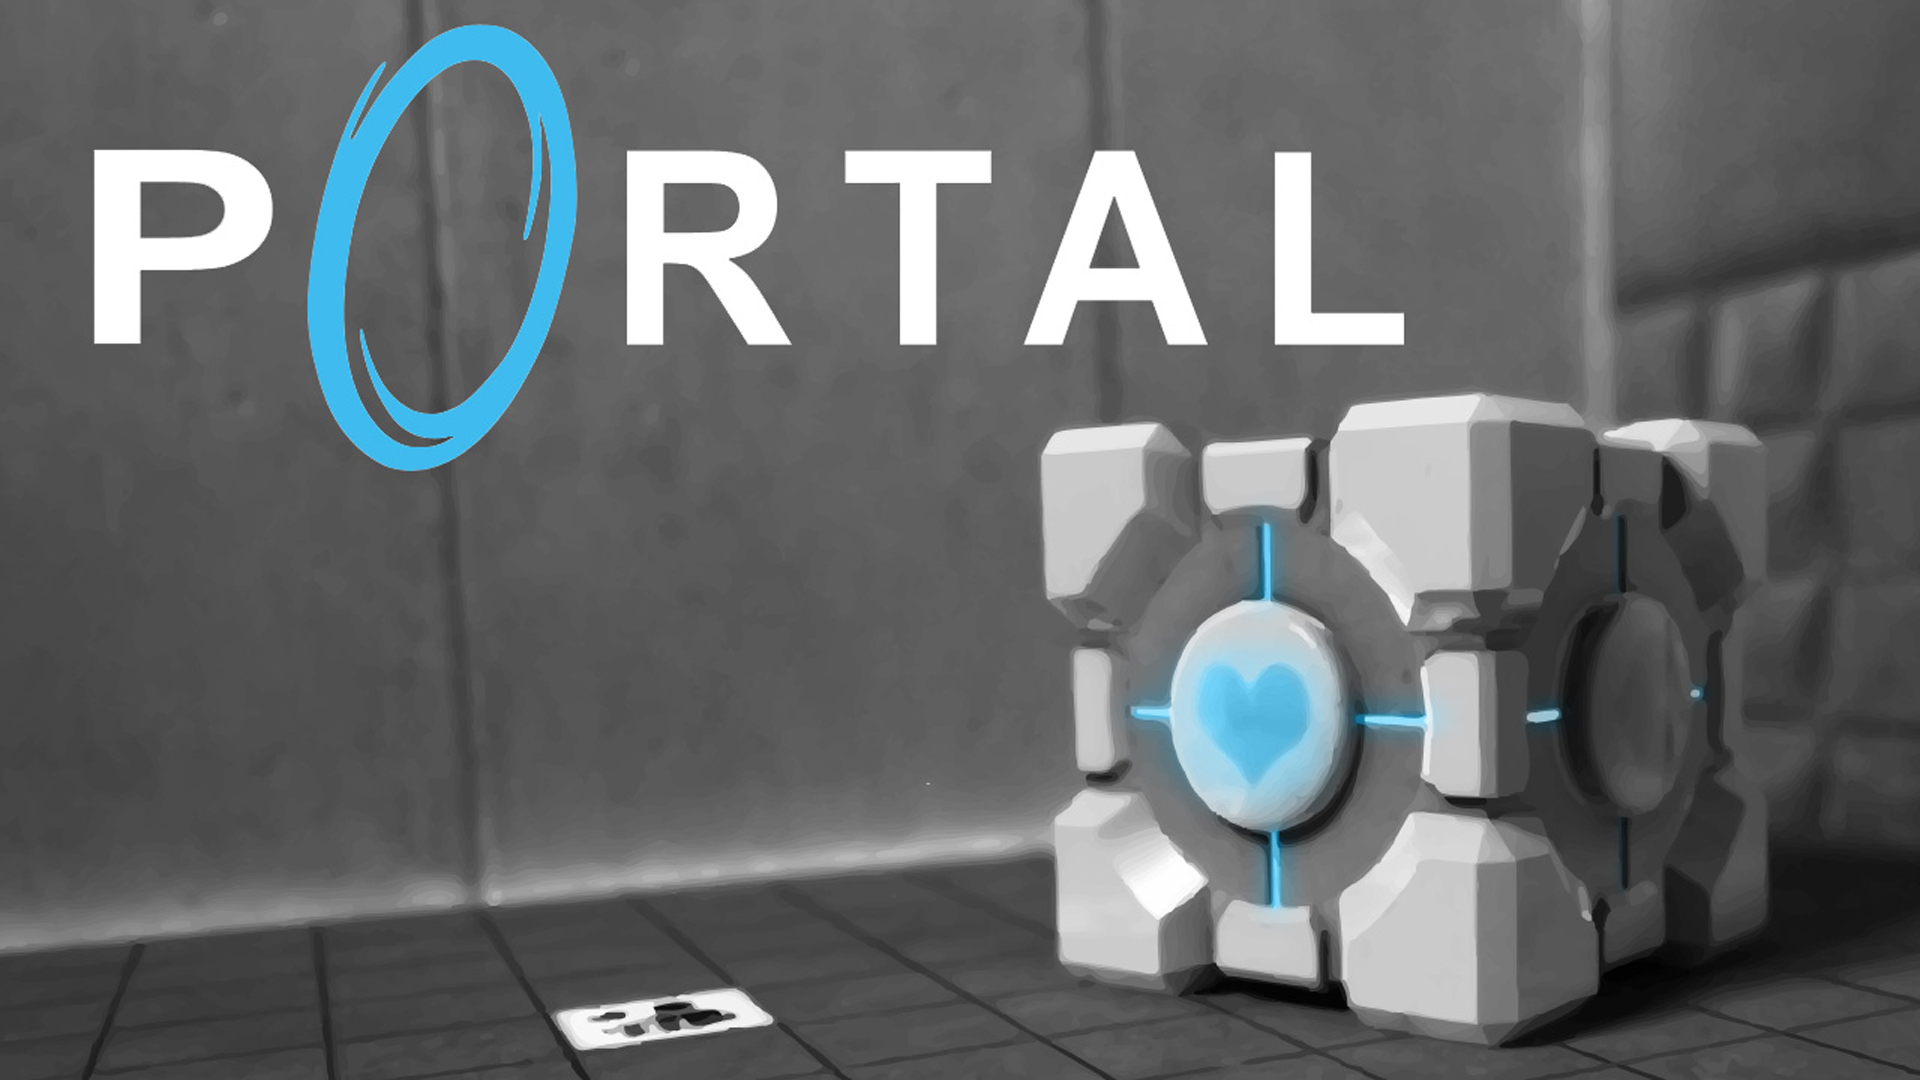 Let’s Play Portal